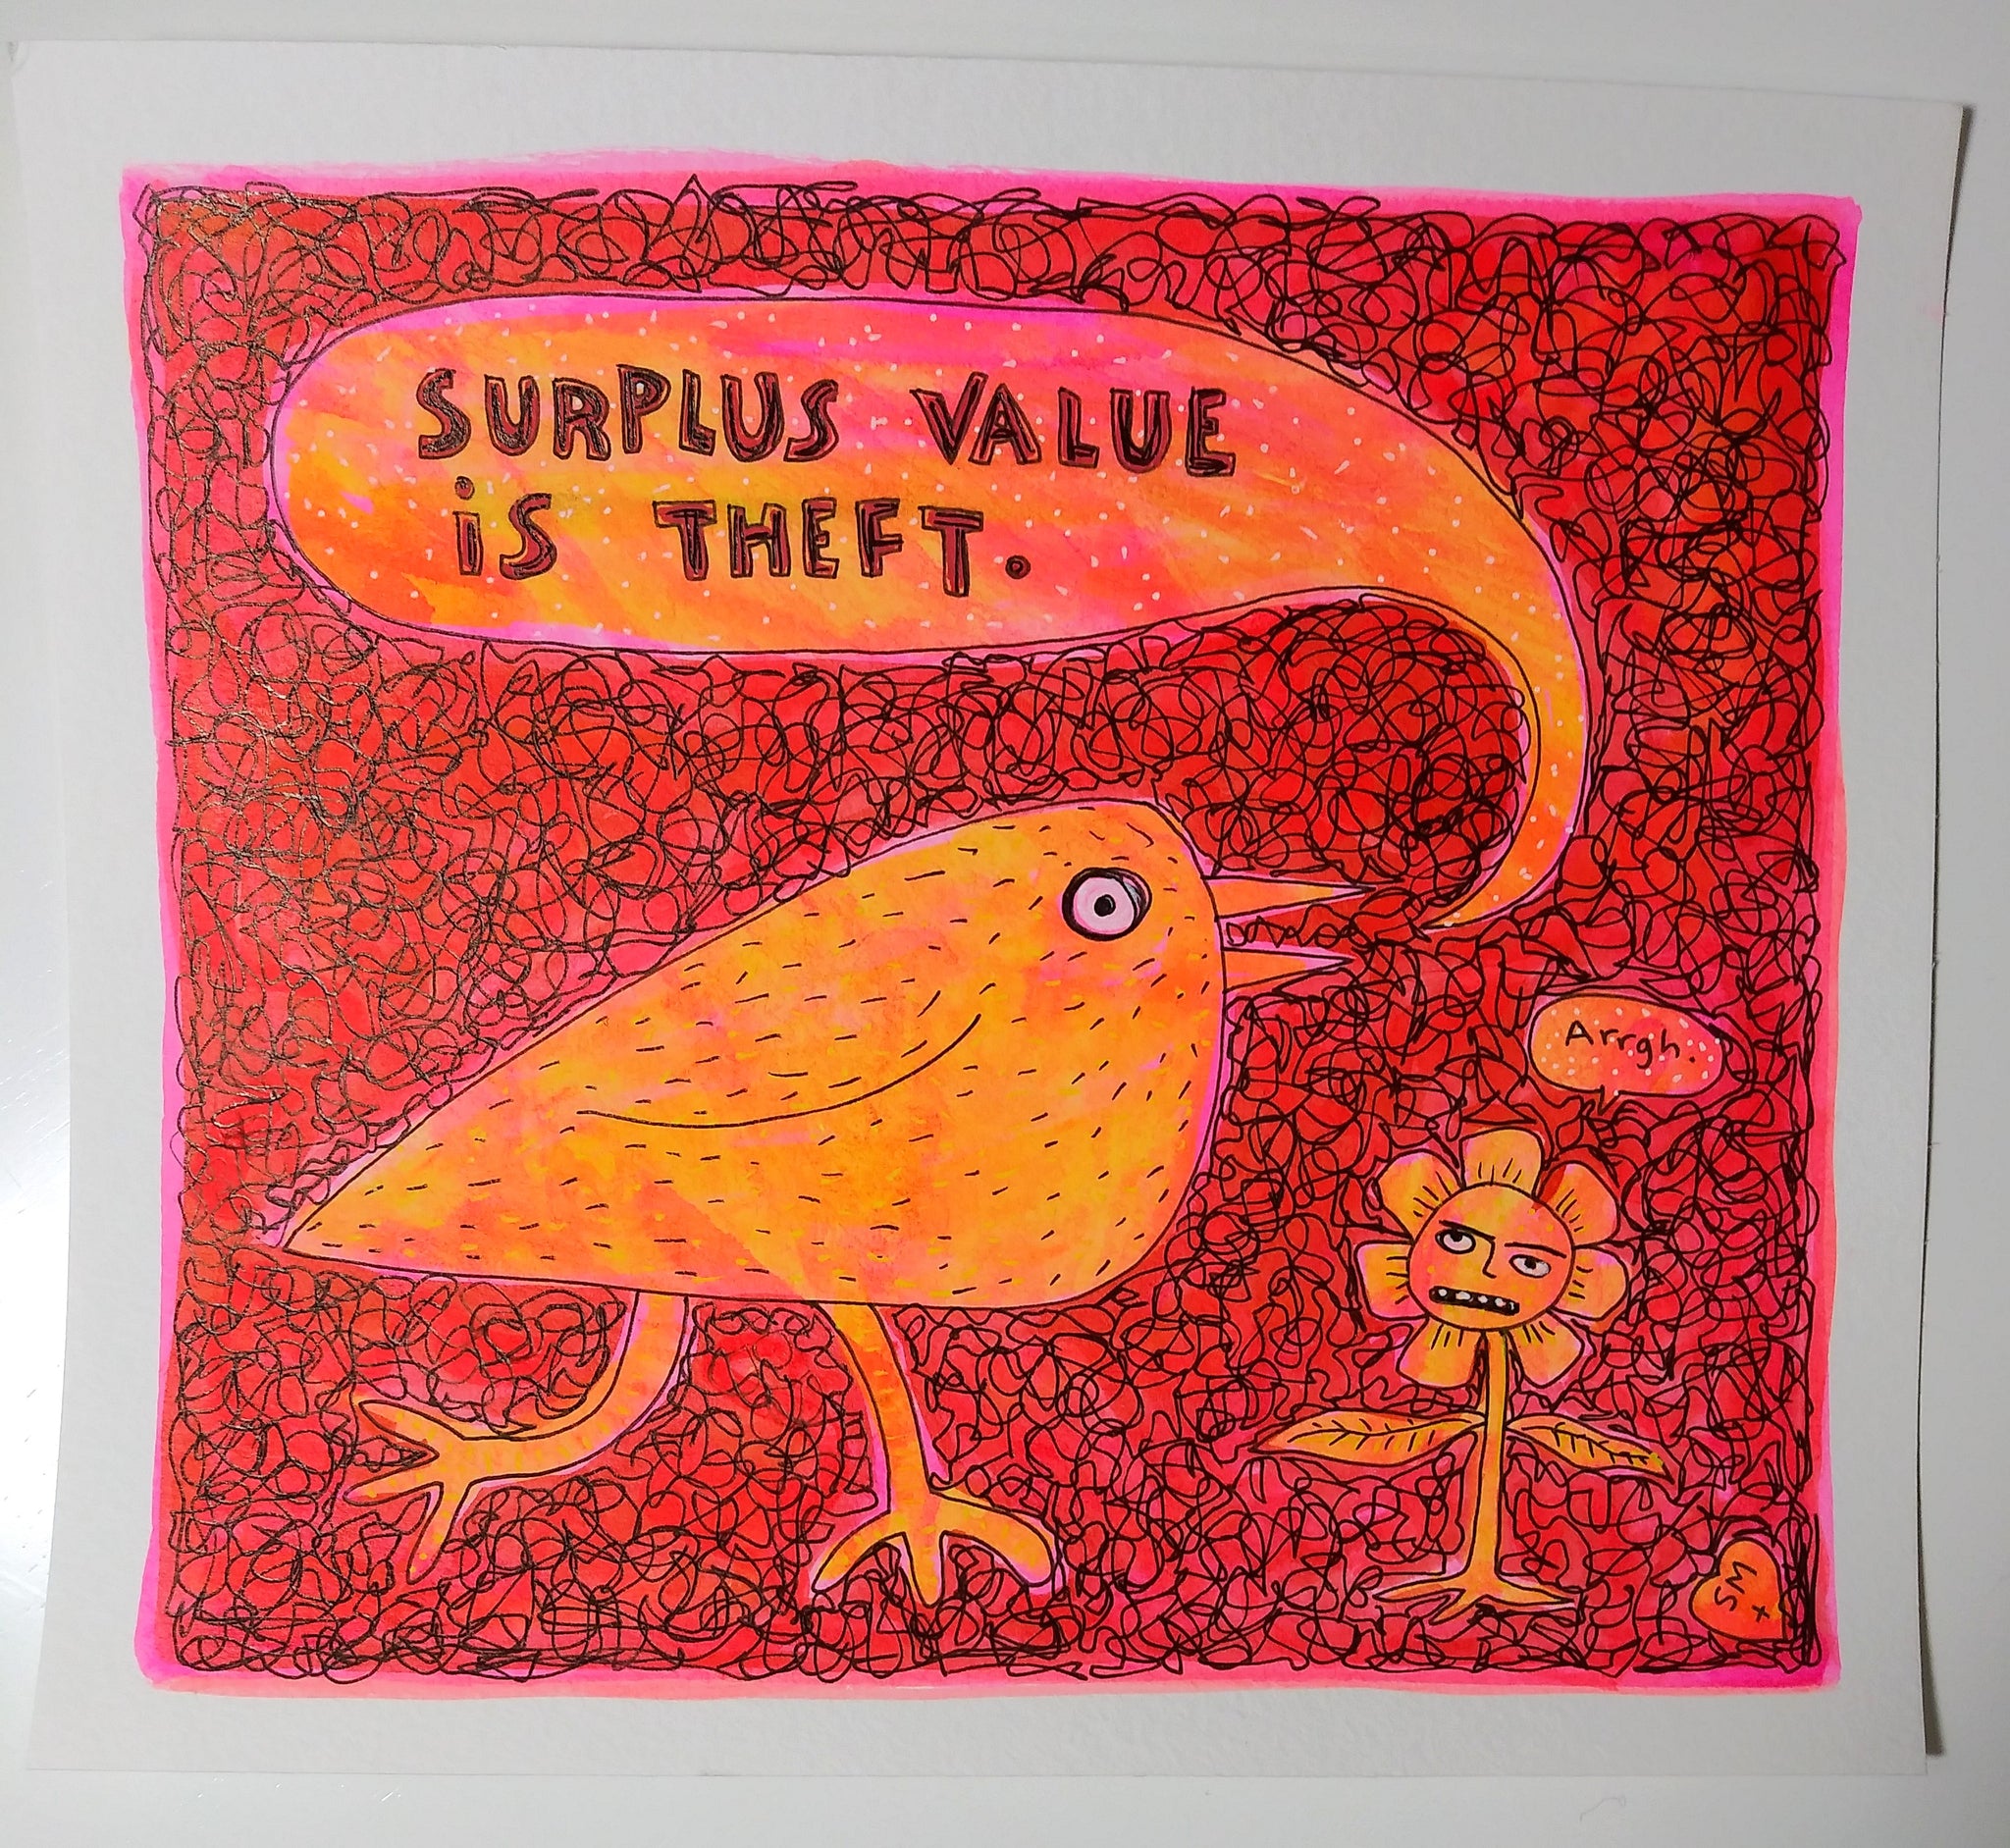 Surplus Value is Theft